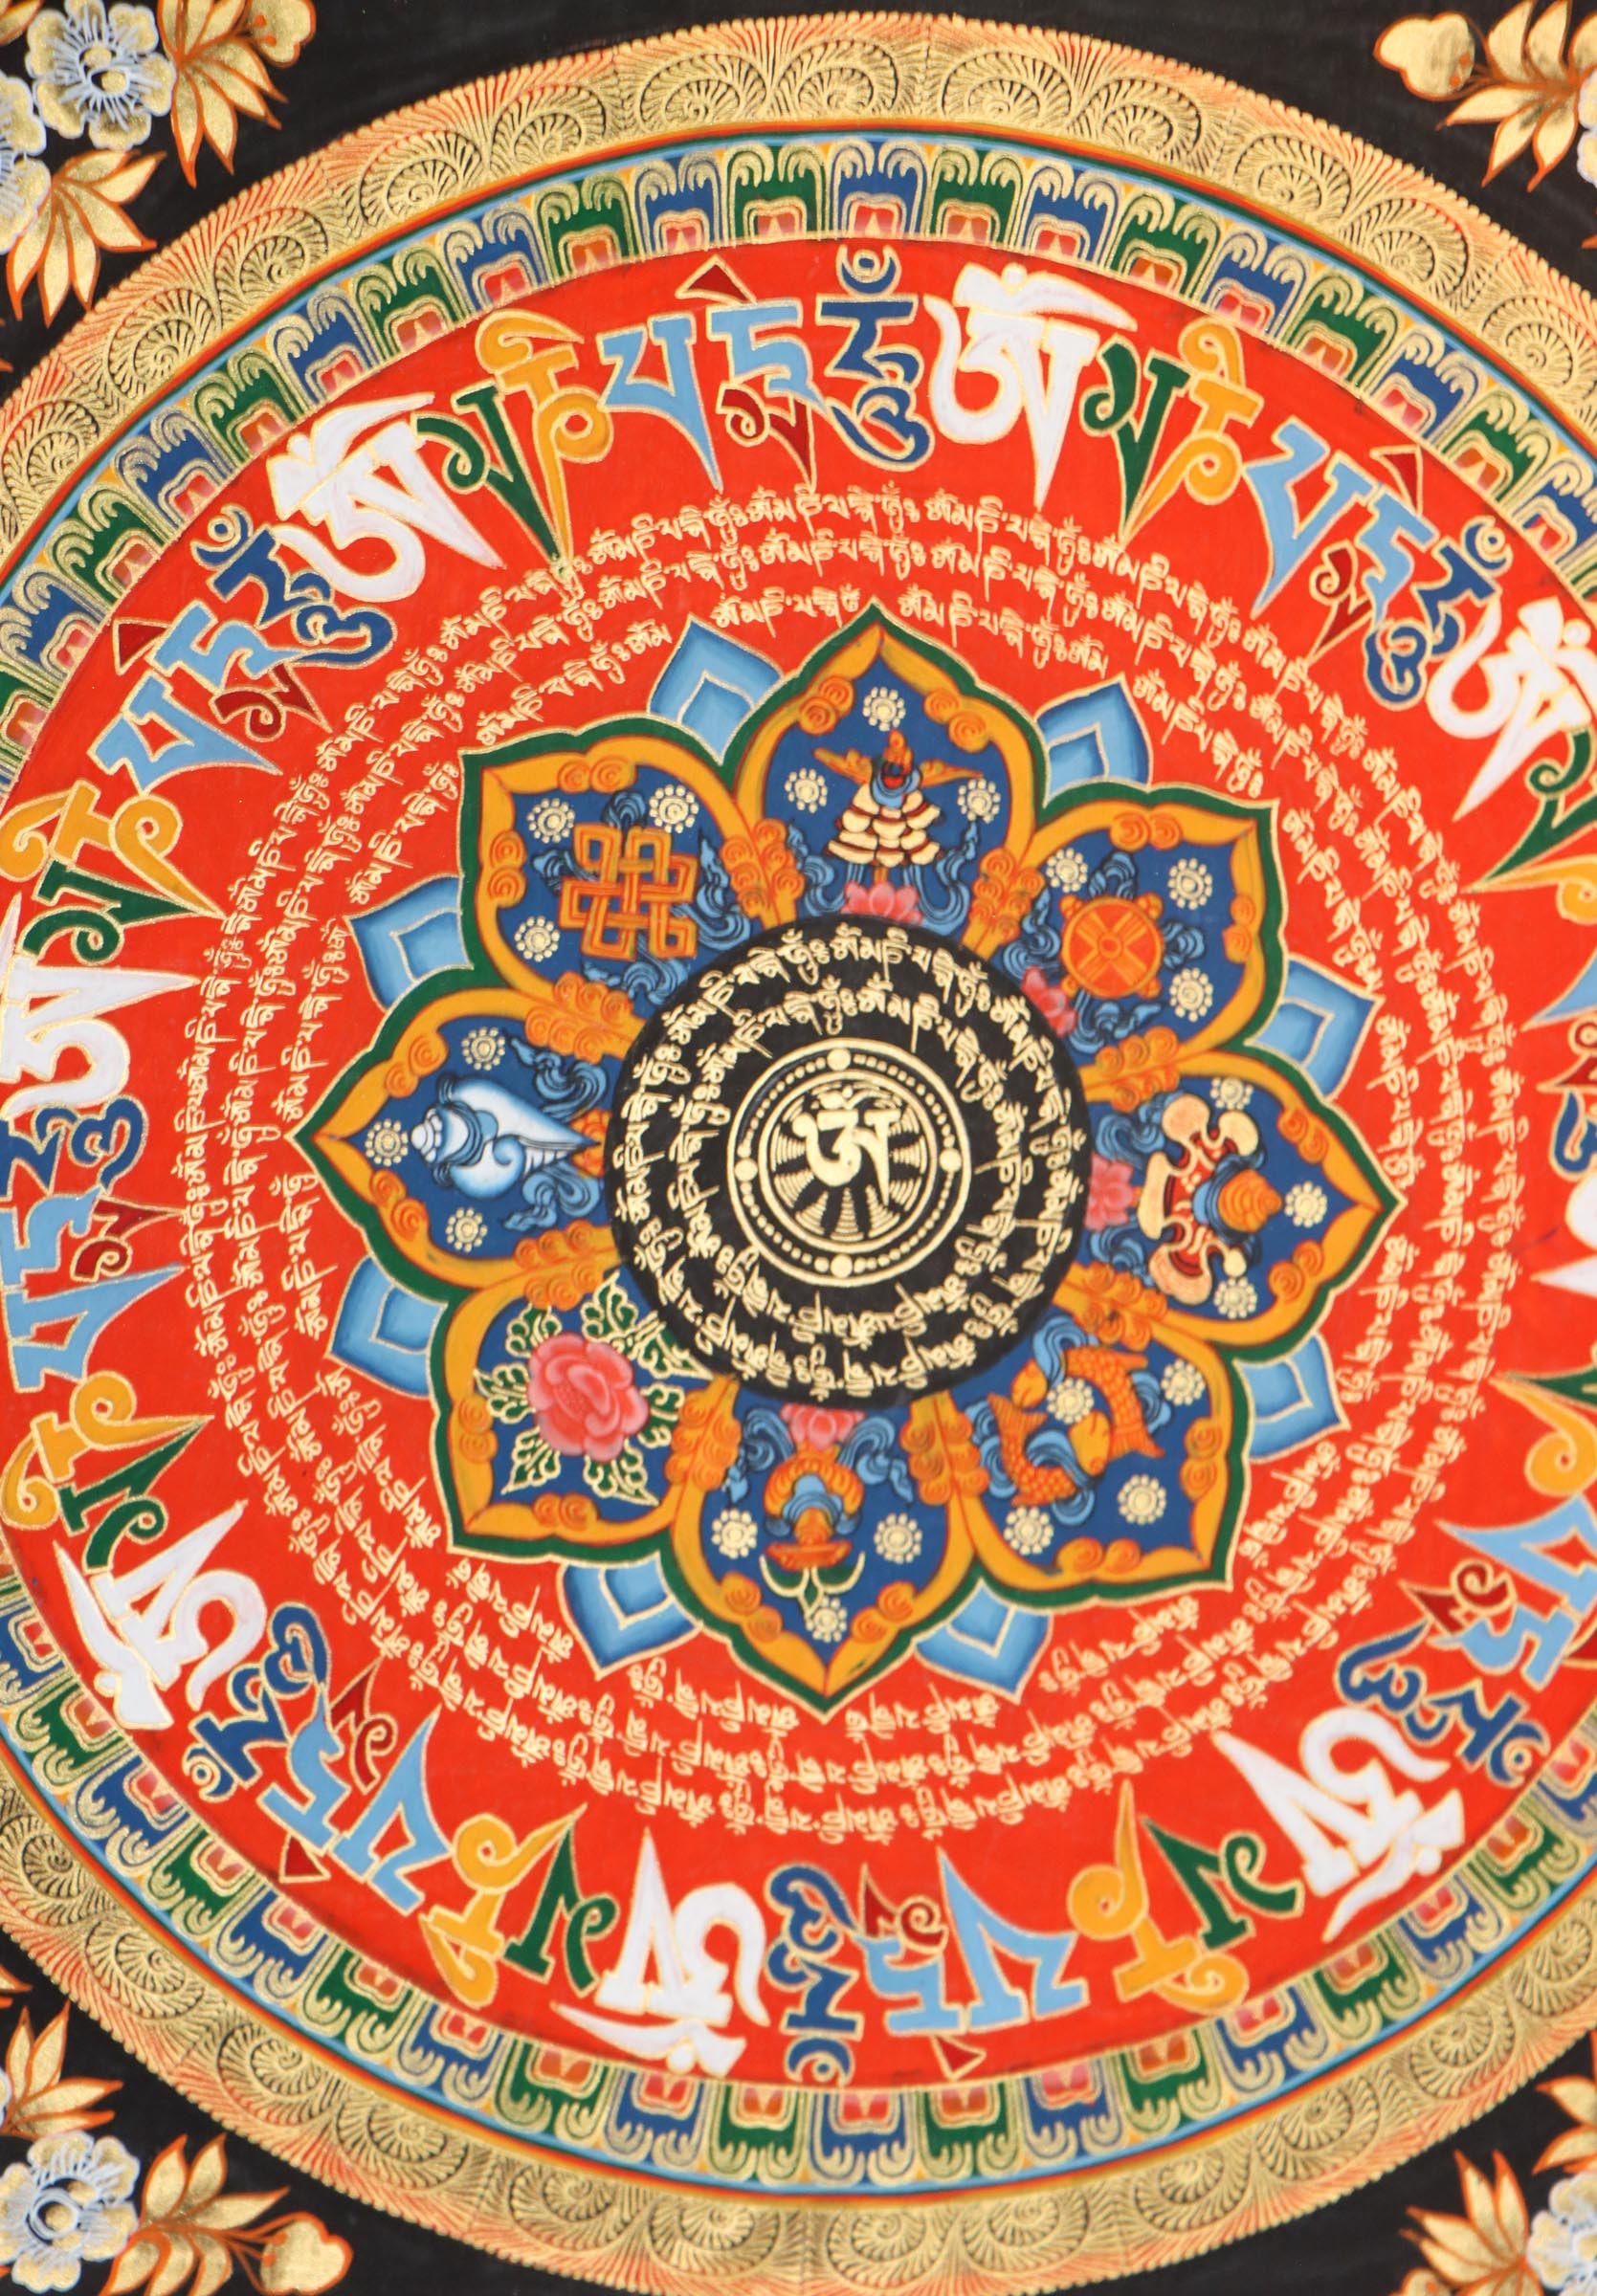 Mantra Mandala Thangka is used for spiritual practices.